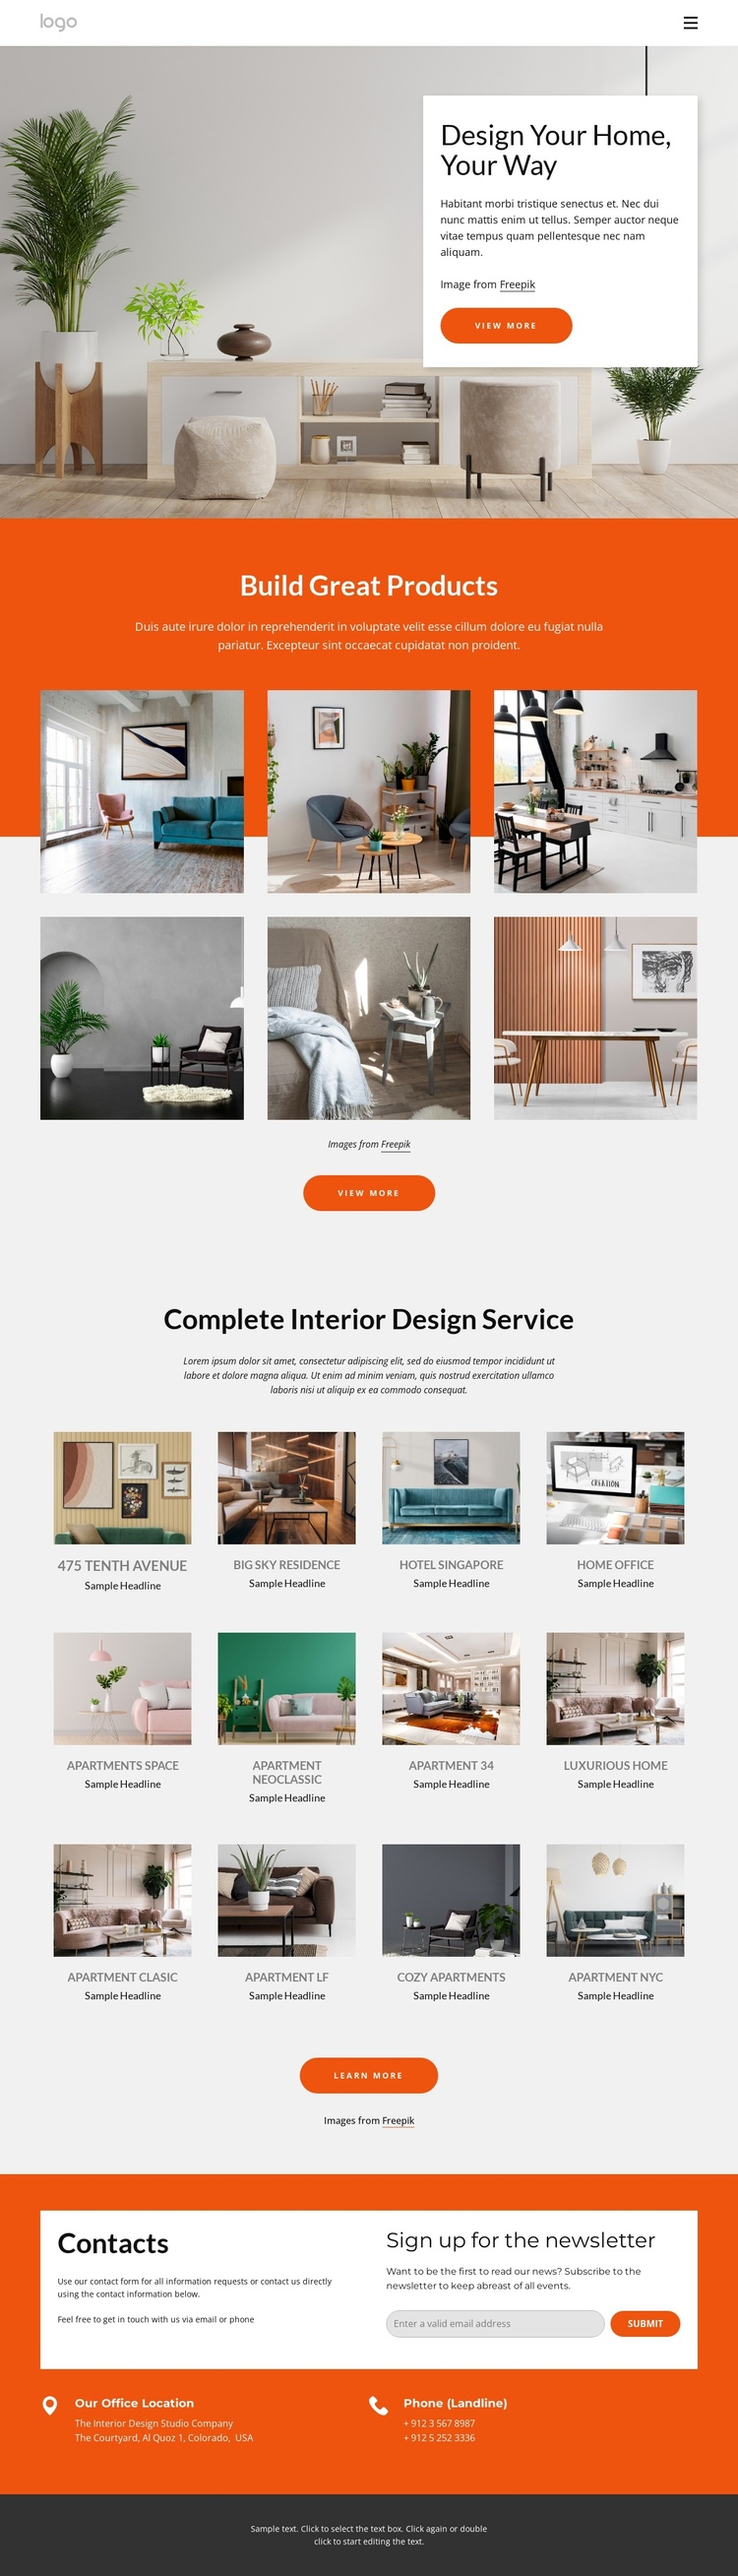 Interior design portfolio Website Builder Software